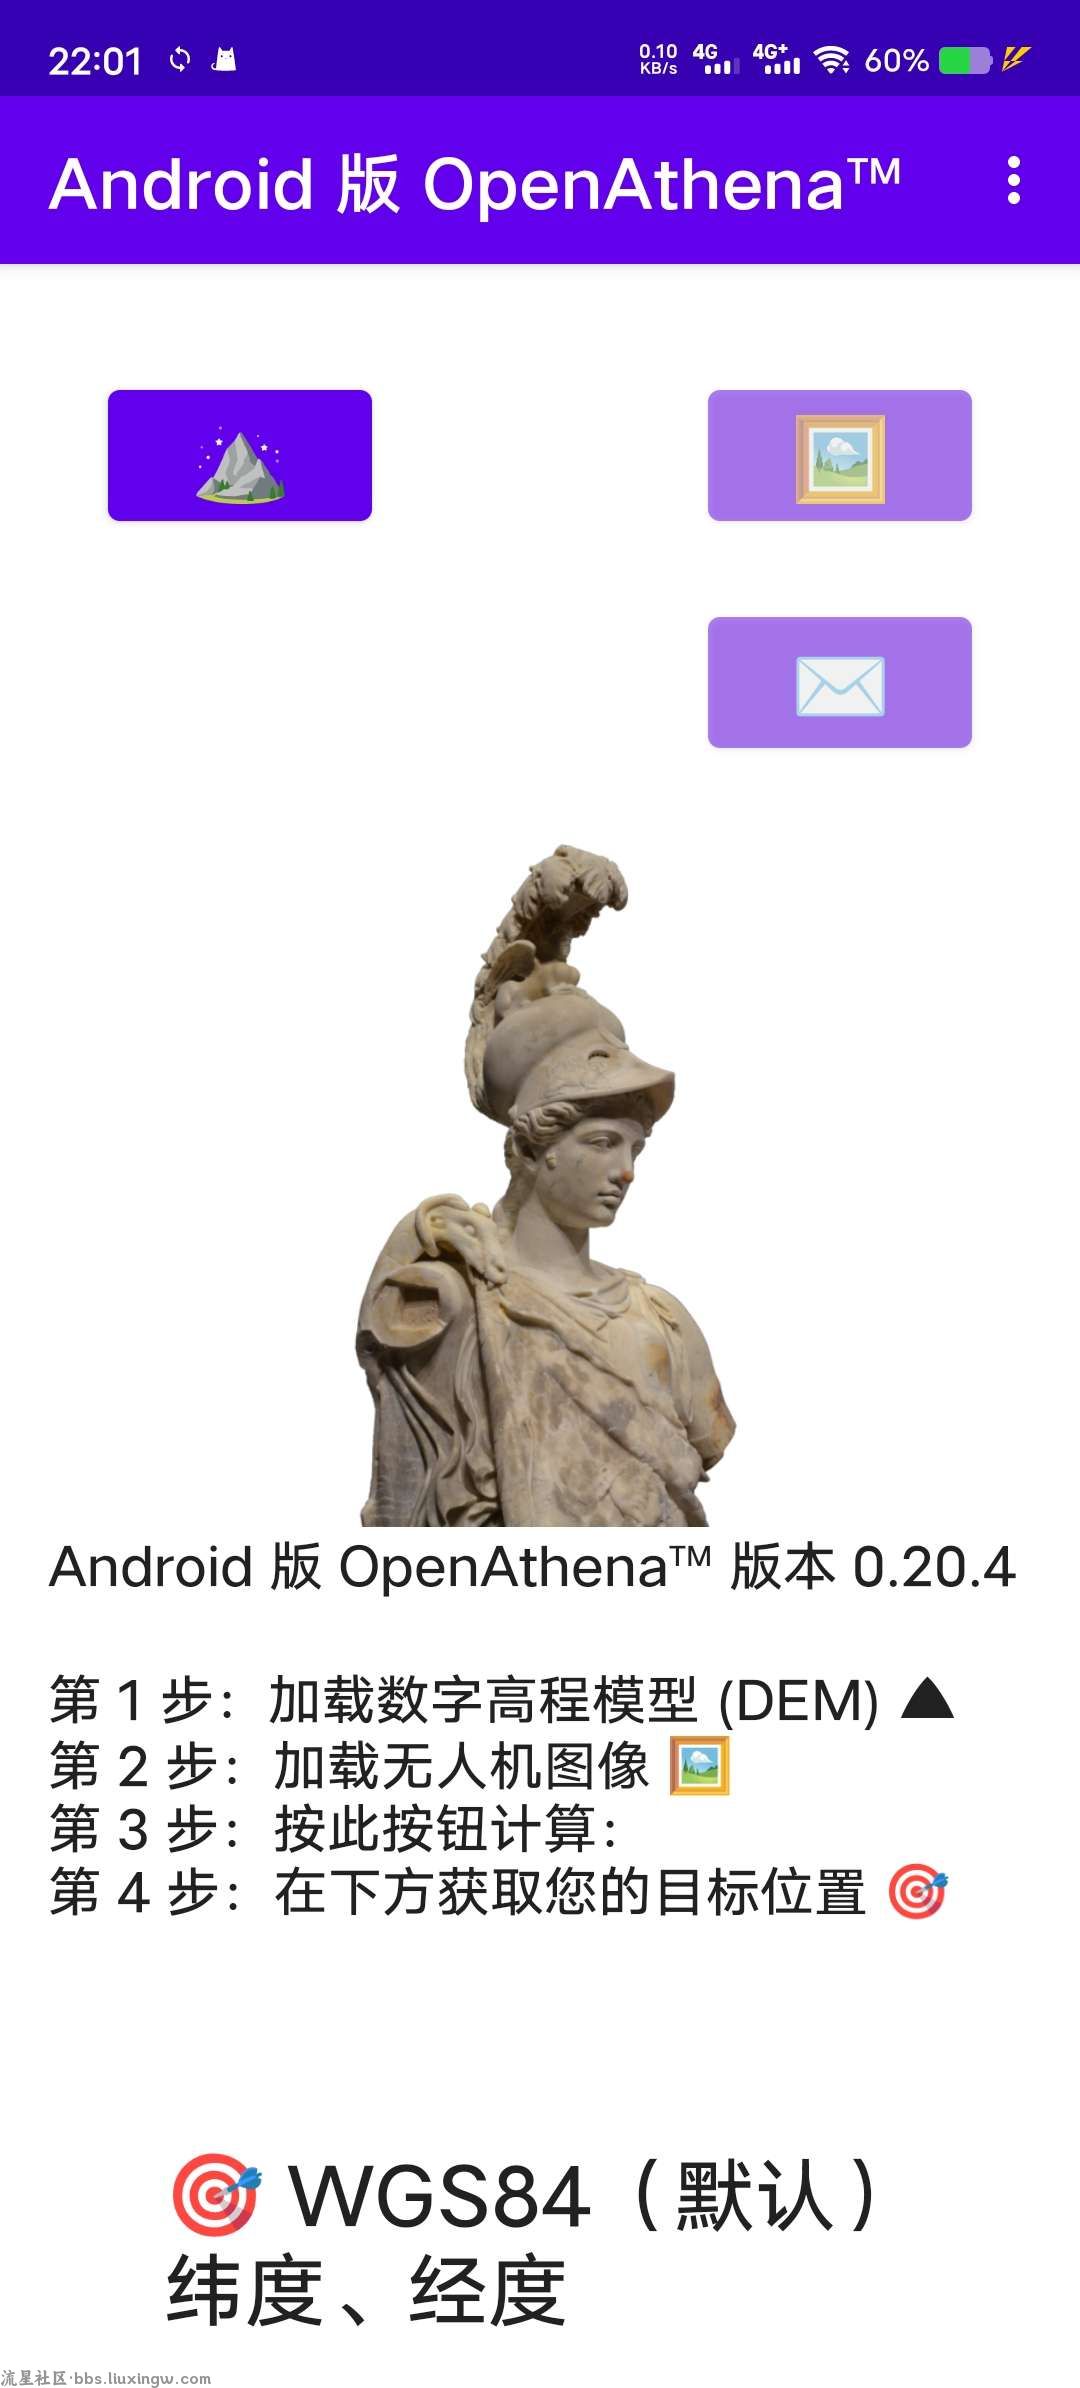 OpenAthena v0.20.4，让无人机定位精确位置